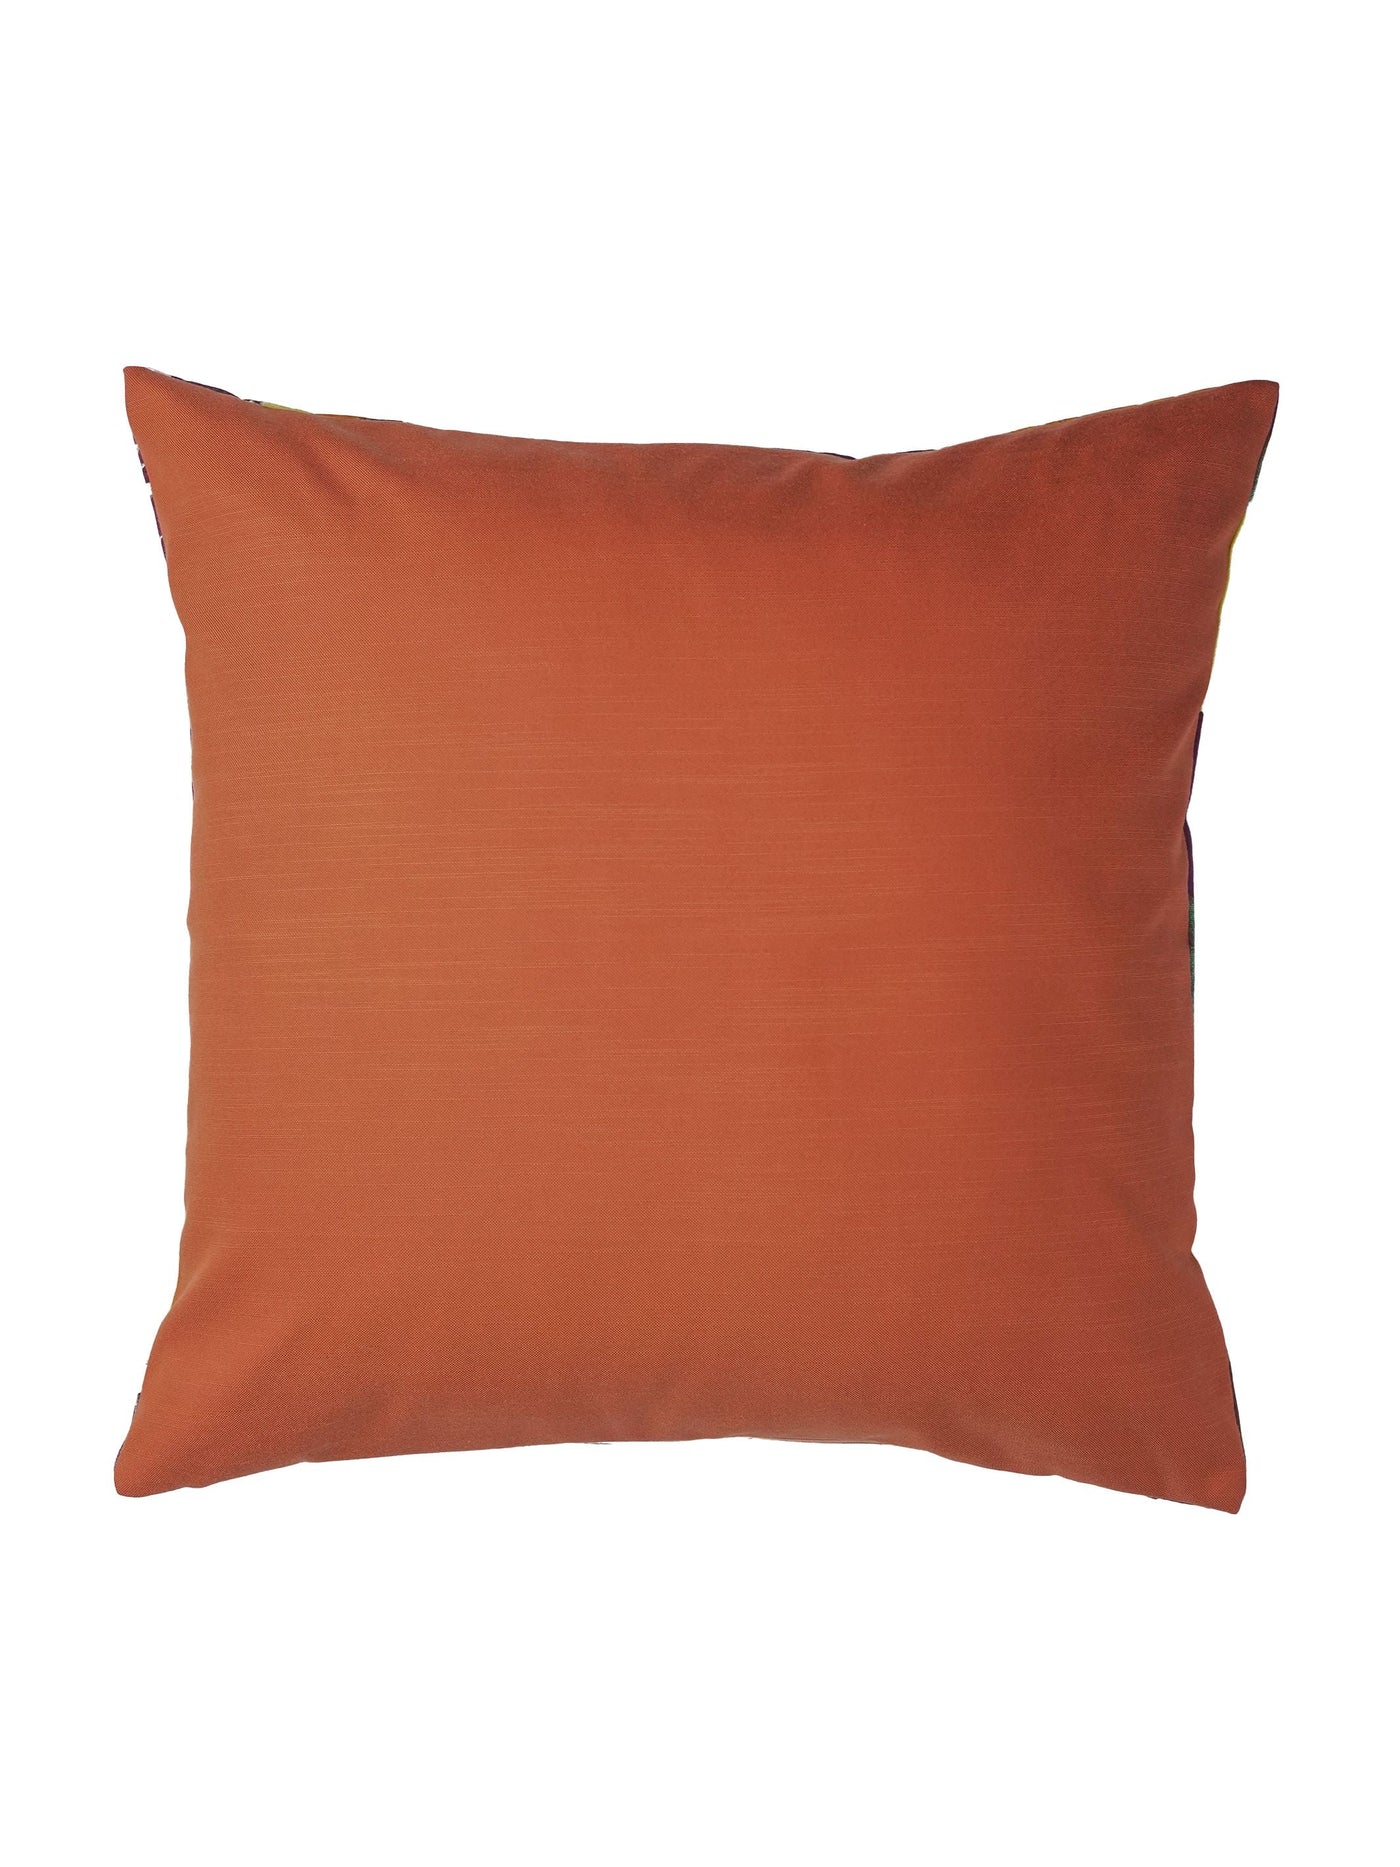 Cushion Cover - Wilderness Tangerine